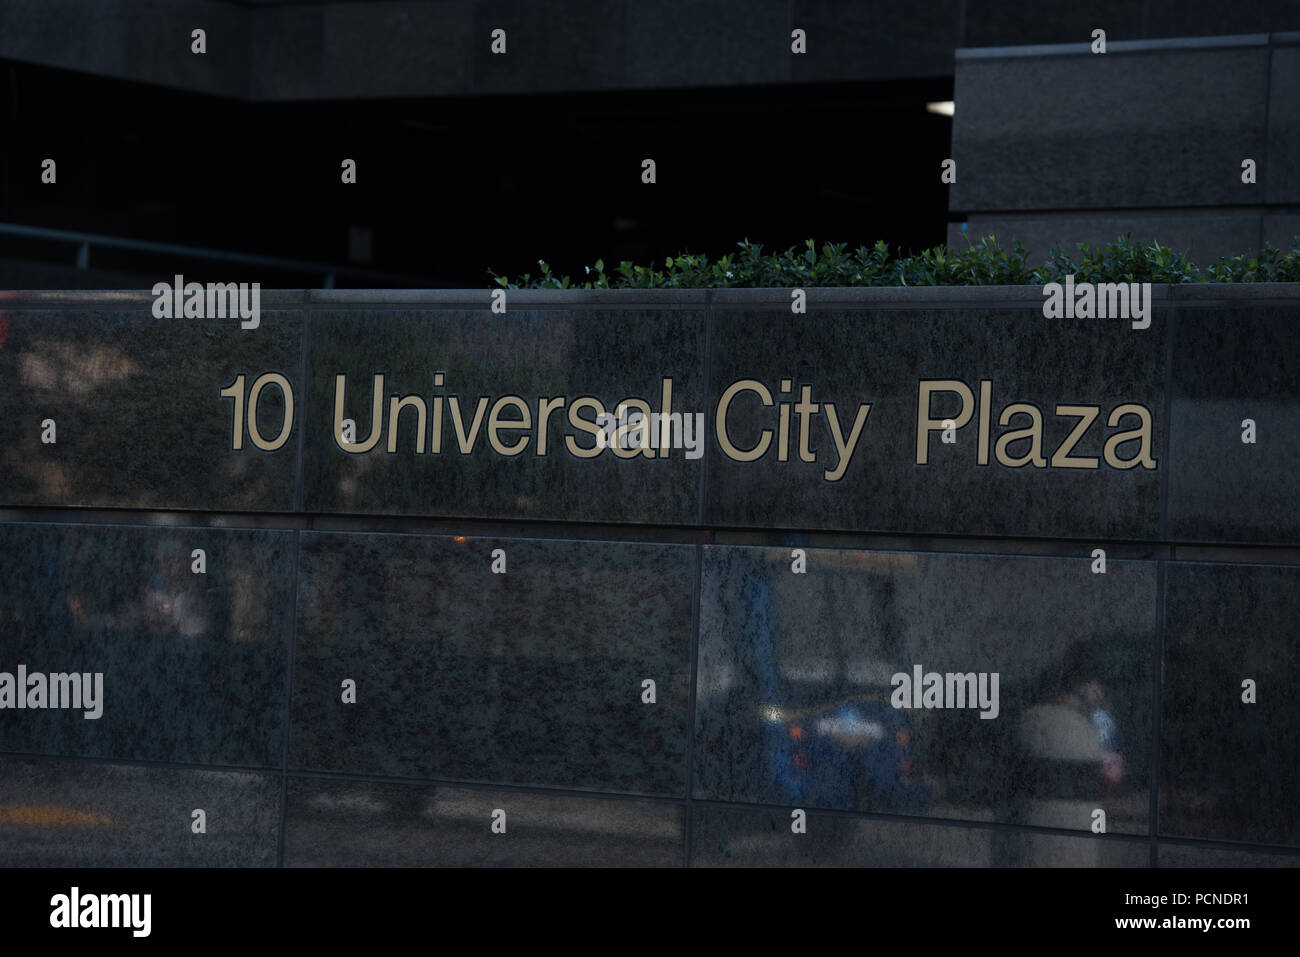 Universal city plaza entrance sign Stock Photo